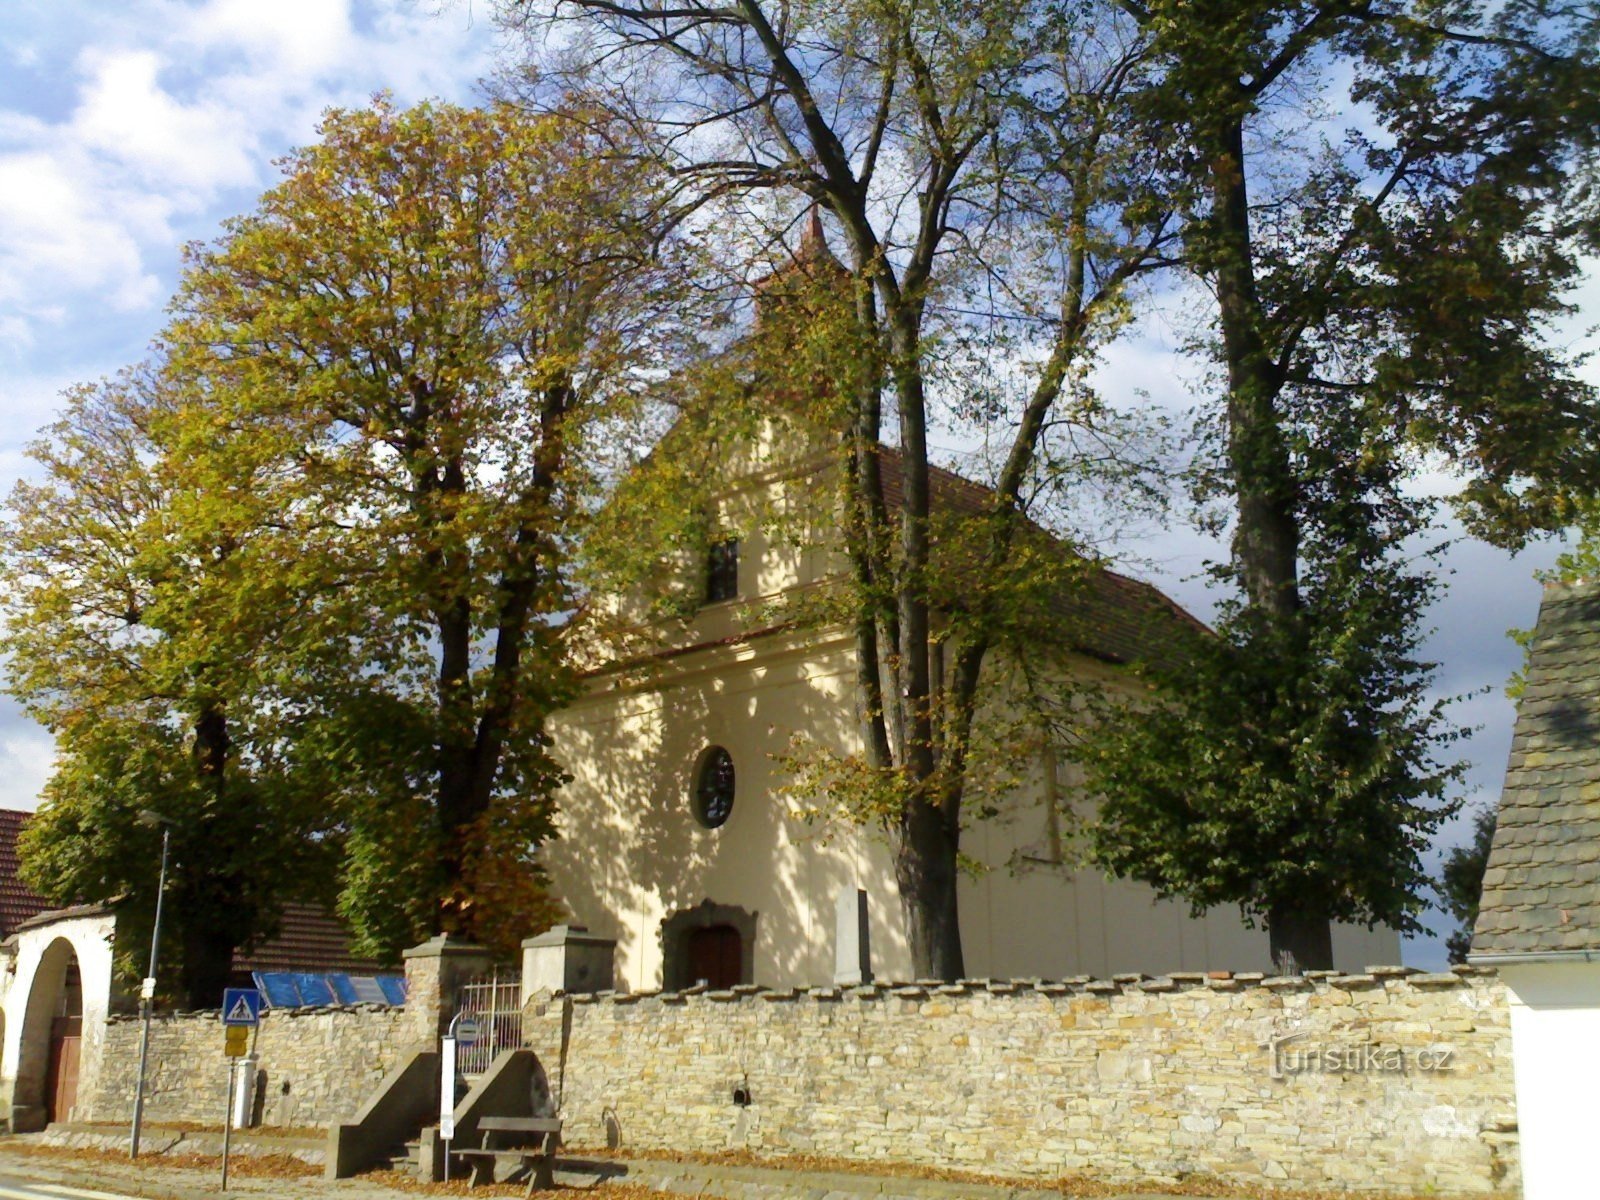 Krňovice 的旅游十字路口